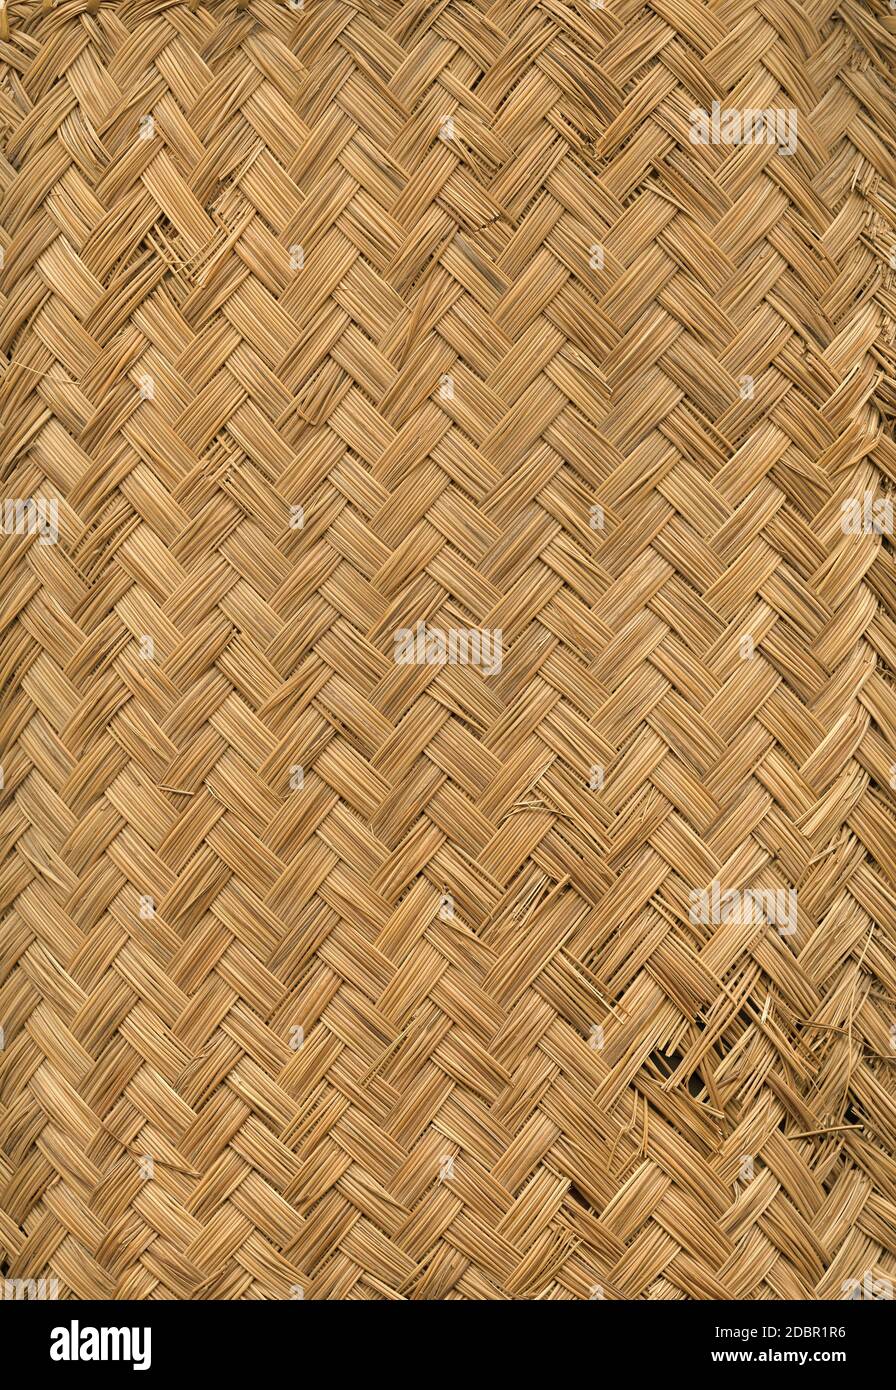 Woven light bamboo mat texture background Stock Photo - Alamy